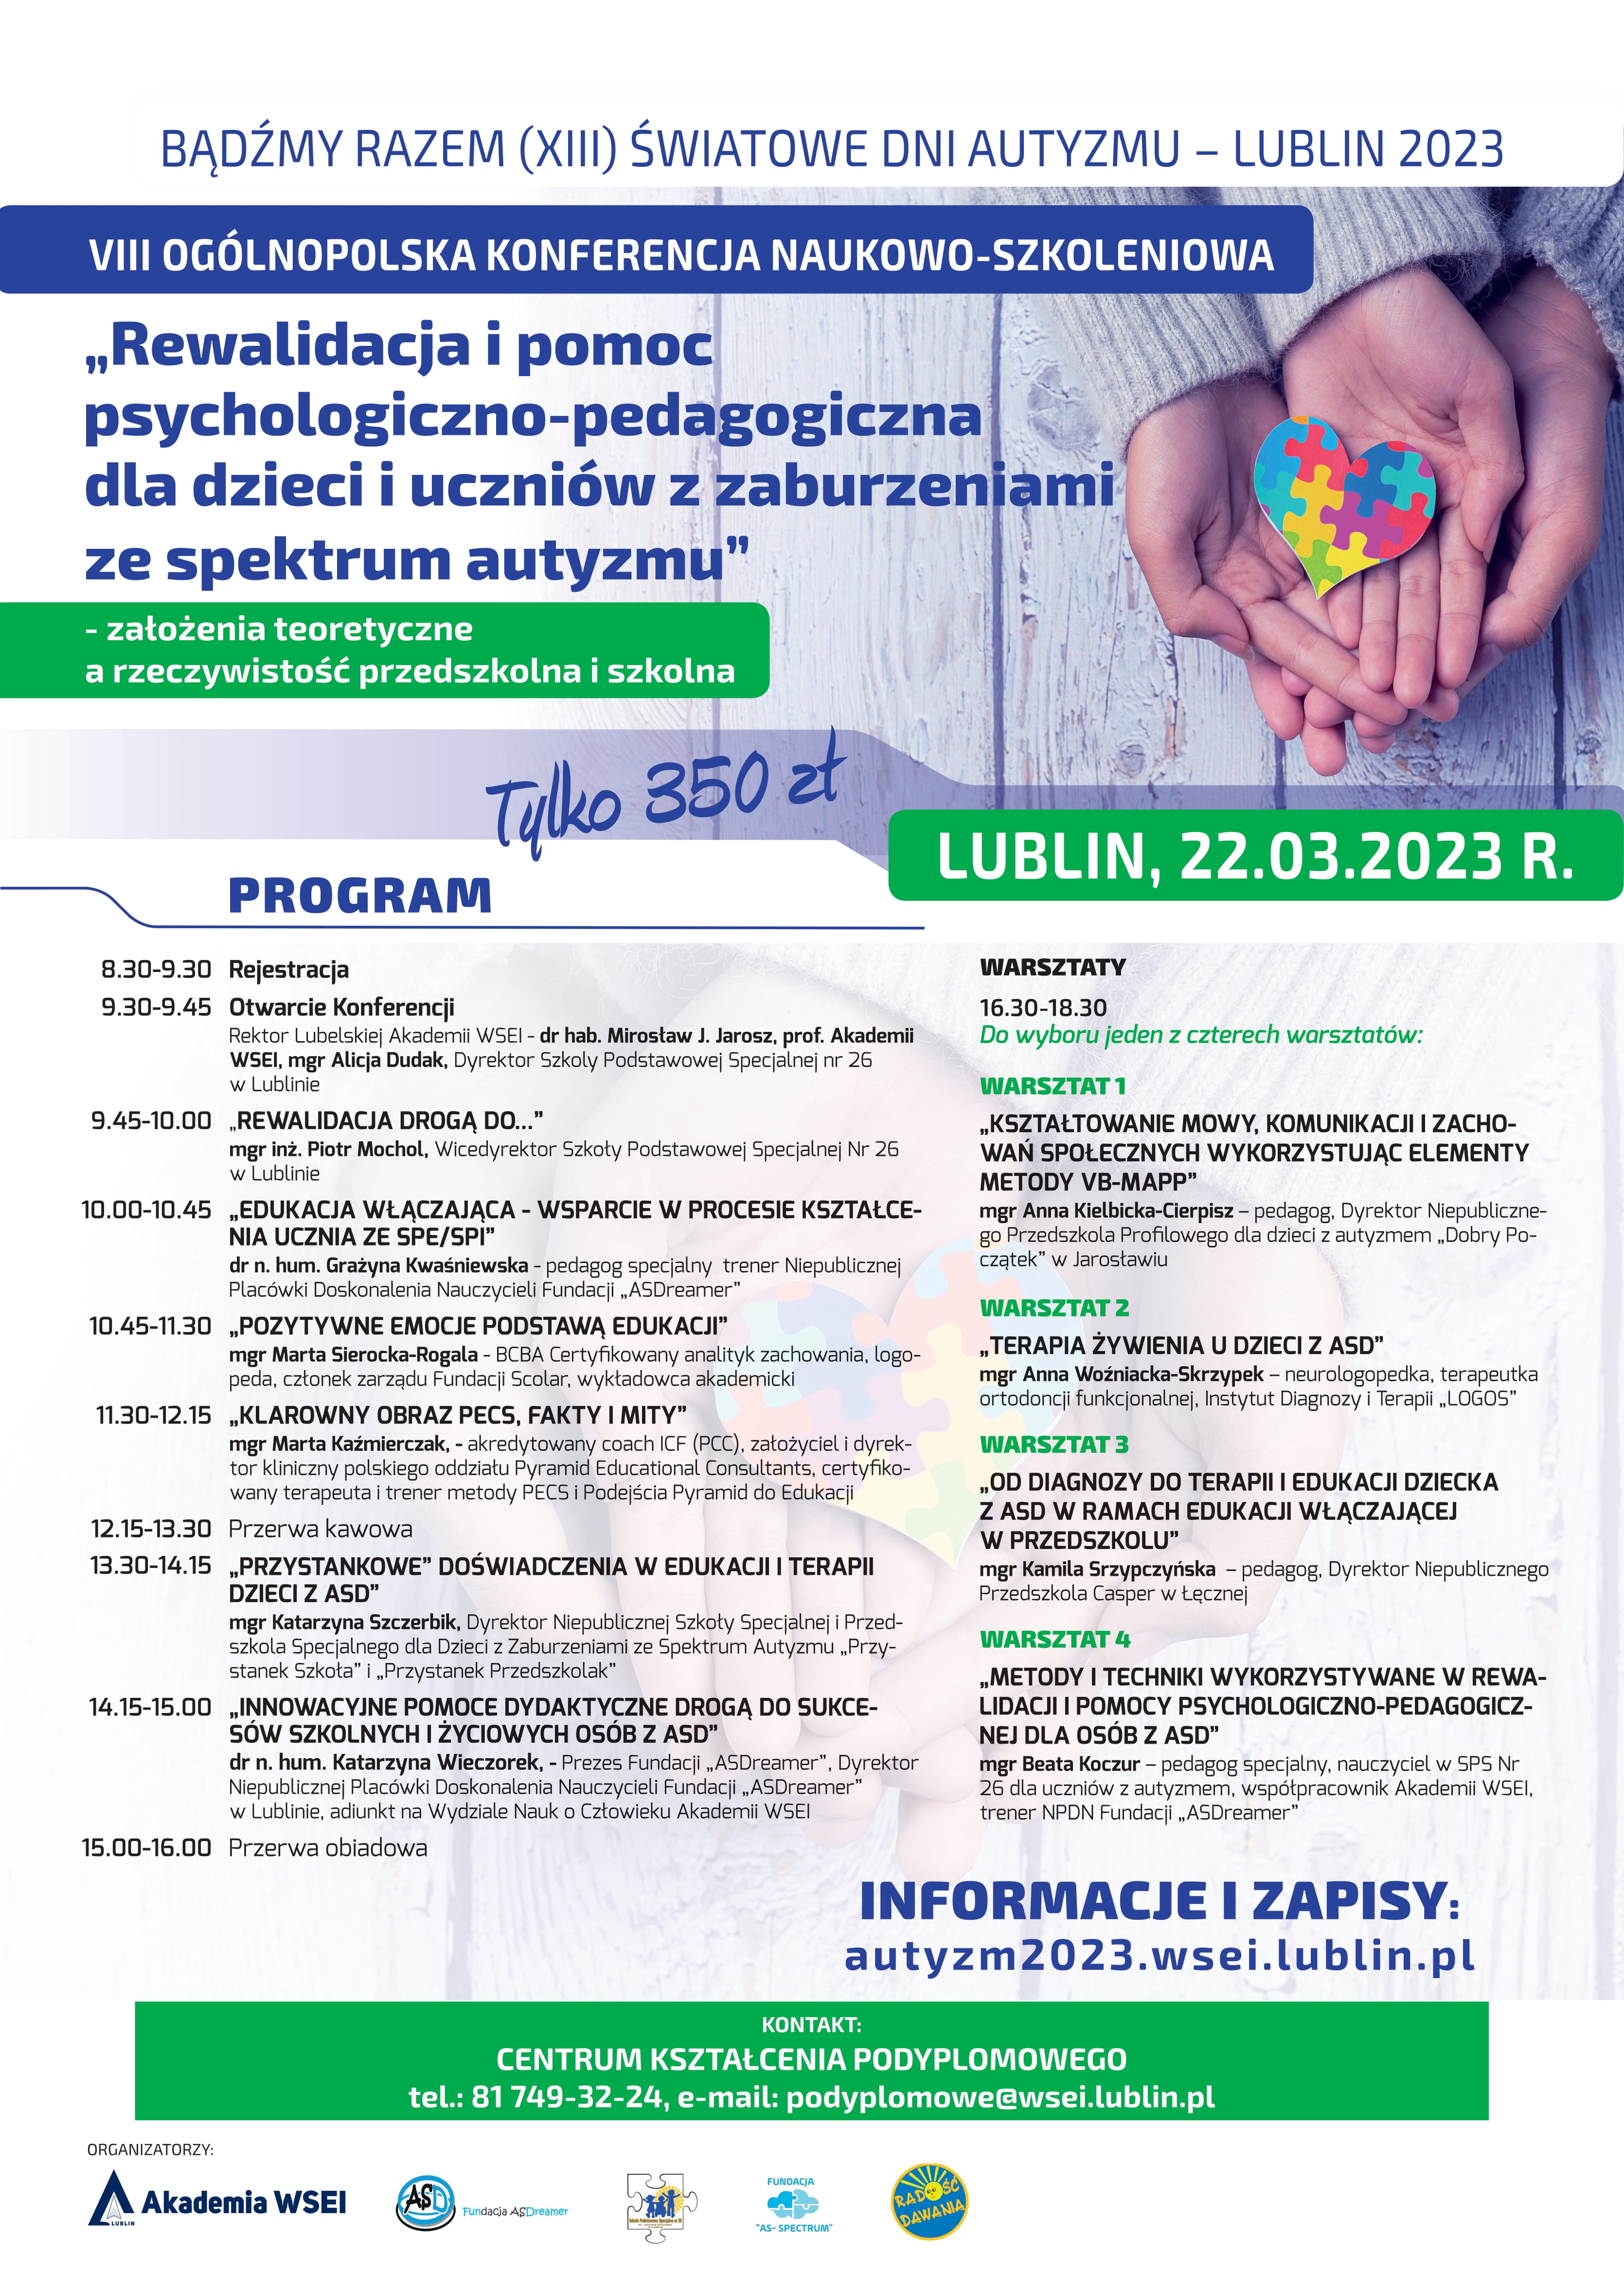 https://fundacjaasdreamer.pl/inc/pliki/Konferencja/plakat.jpg